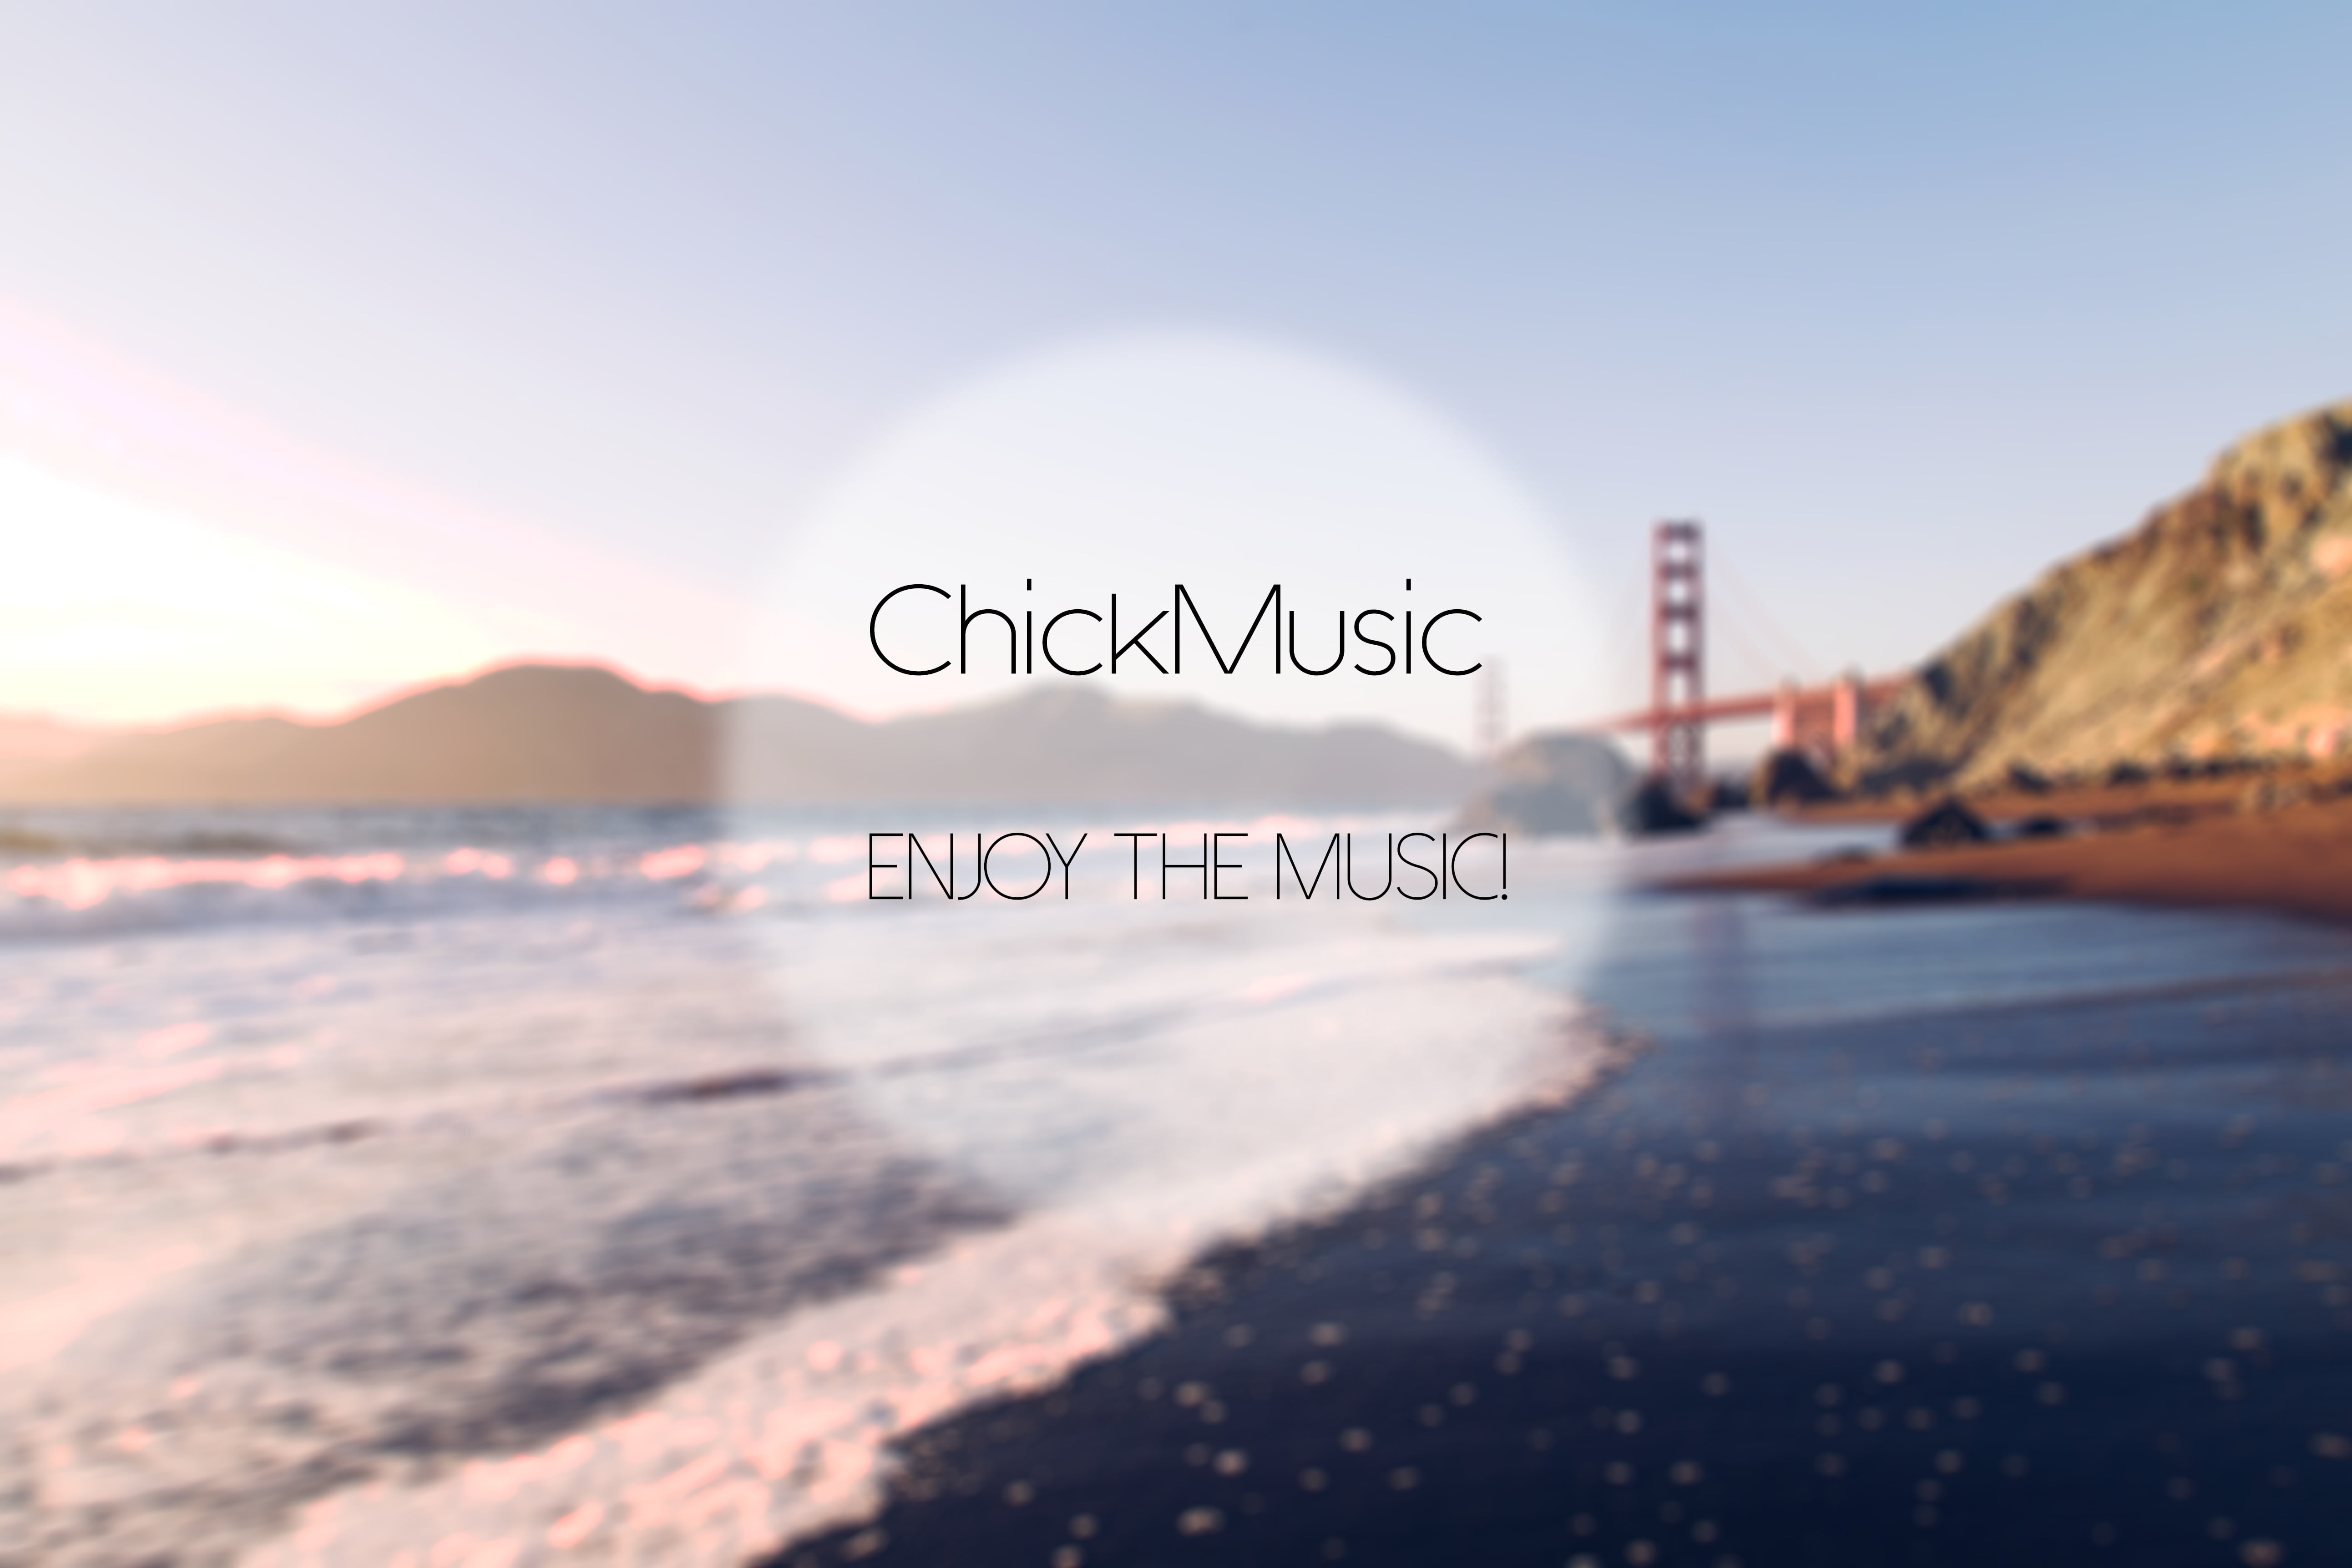 Chick Music text on Golden Gate Bridge background, San Francisco